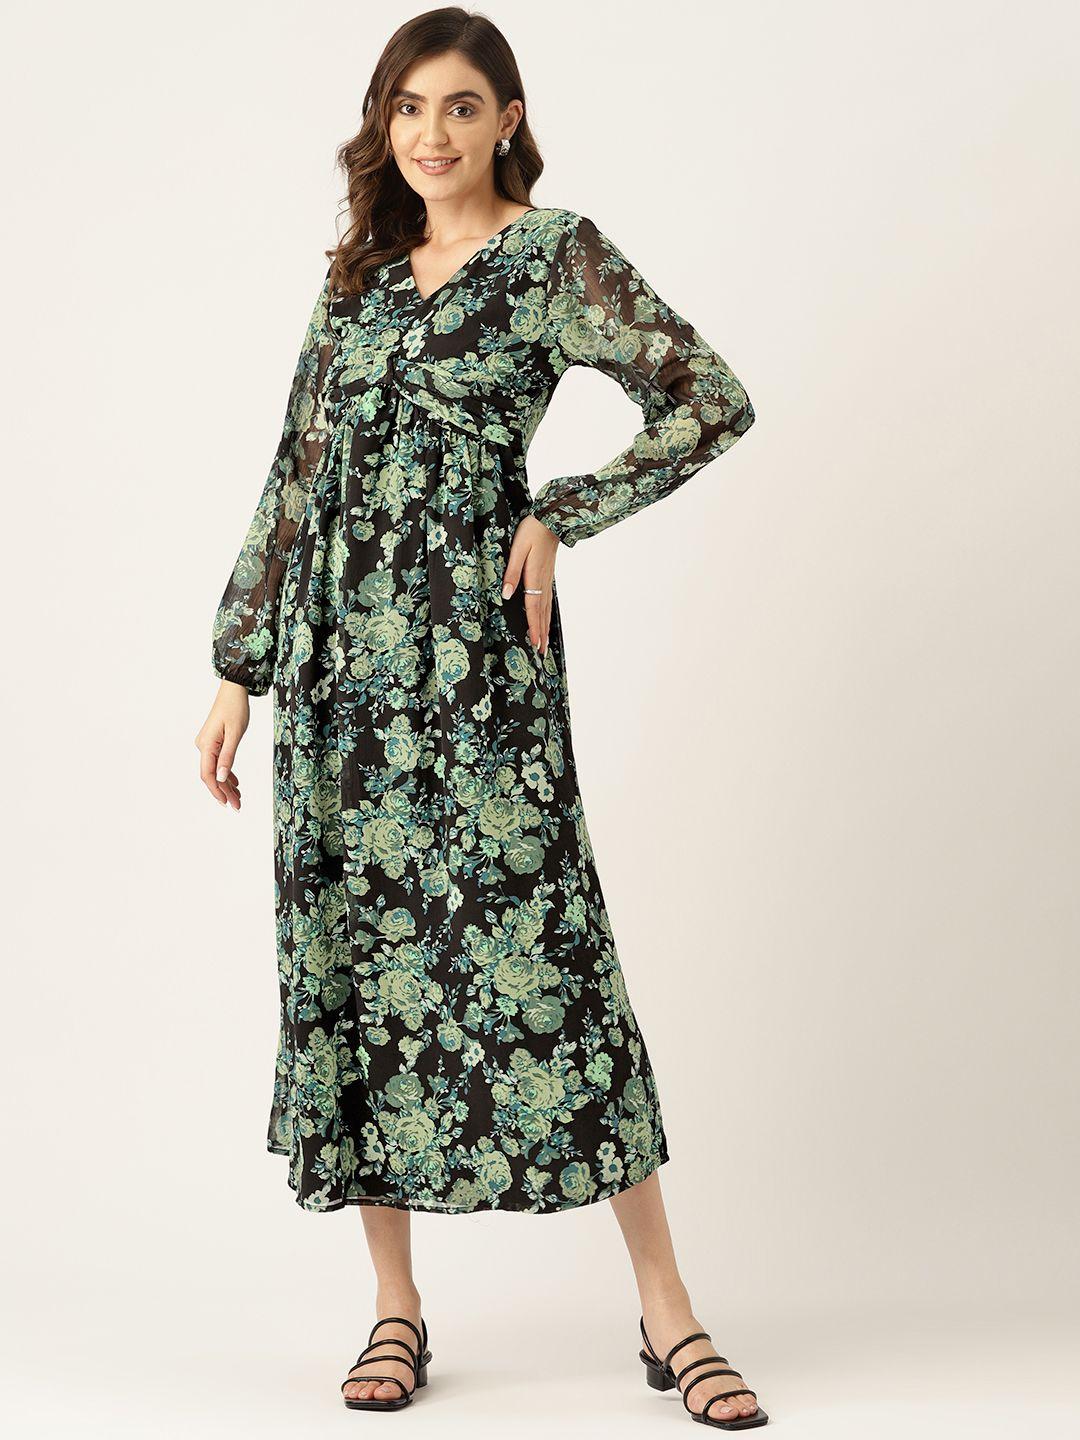 label-regalia-floral-printed-puff-sleeve-empire-style-midi-dress